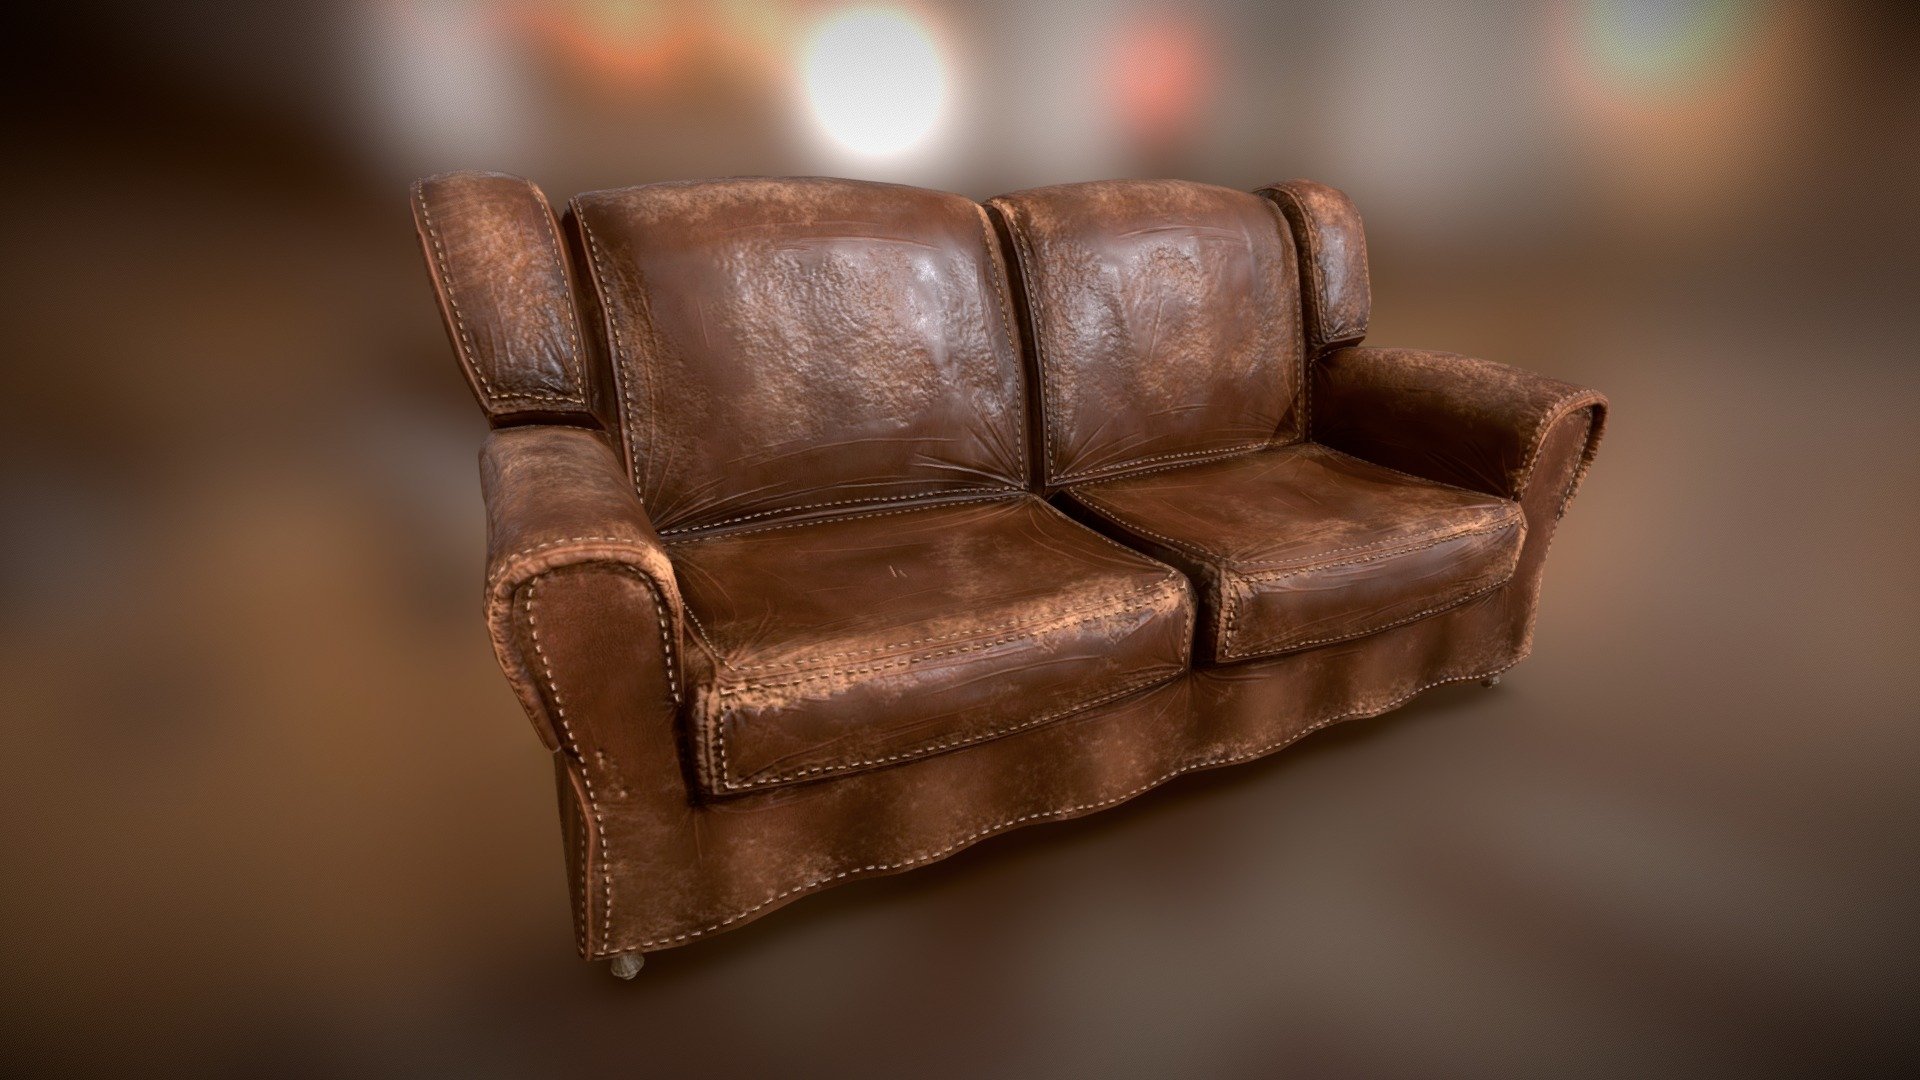 Old sofa - 1500 Vertx - Old Sofa - 3D model by JeanPlastique 3d model